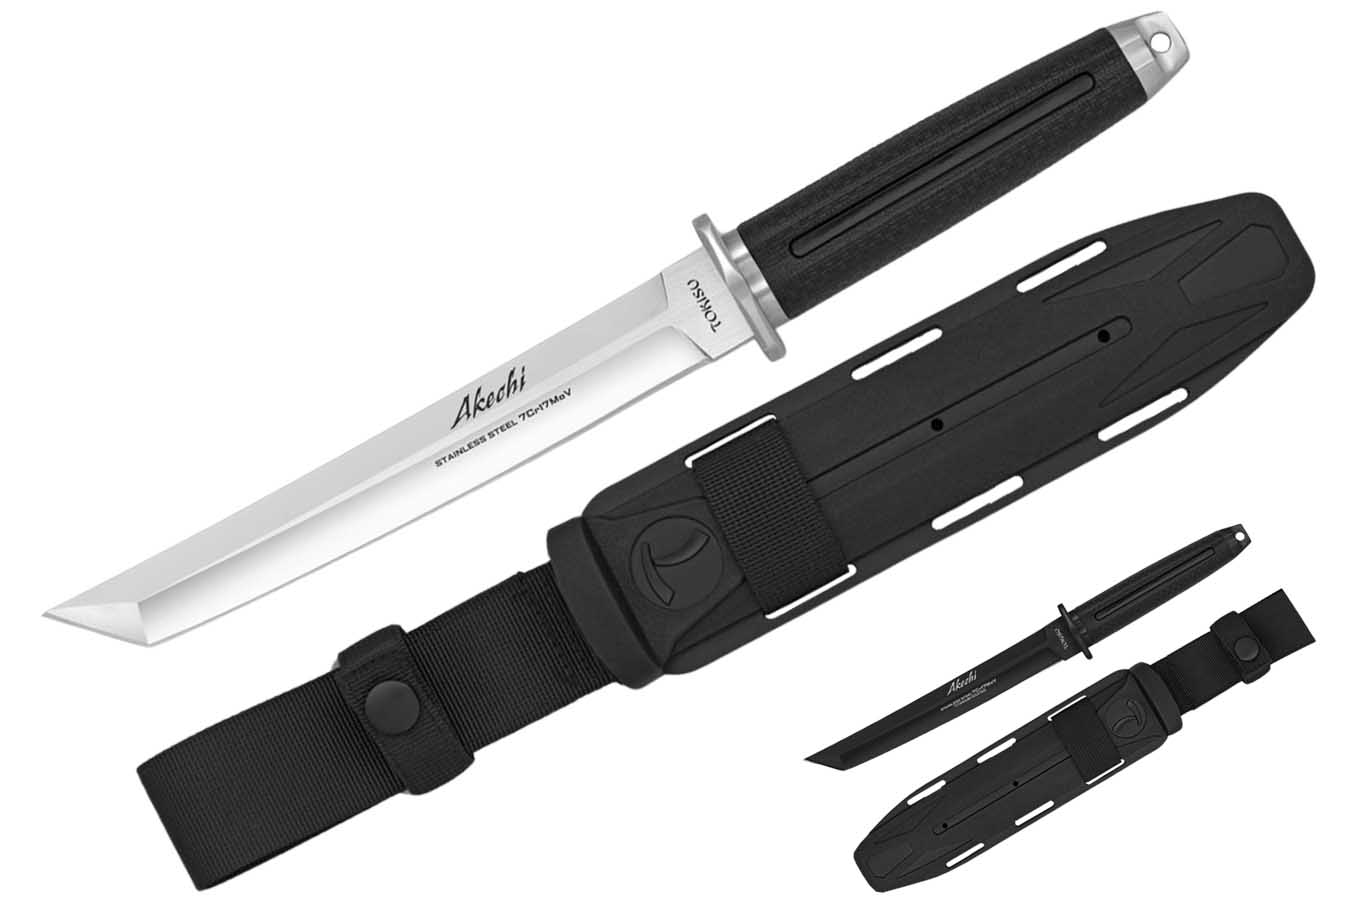 Knife with Tanto Style Blade - Stainless Steel, Tokisu